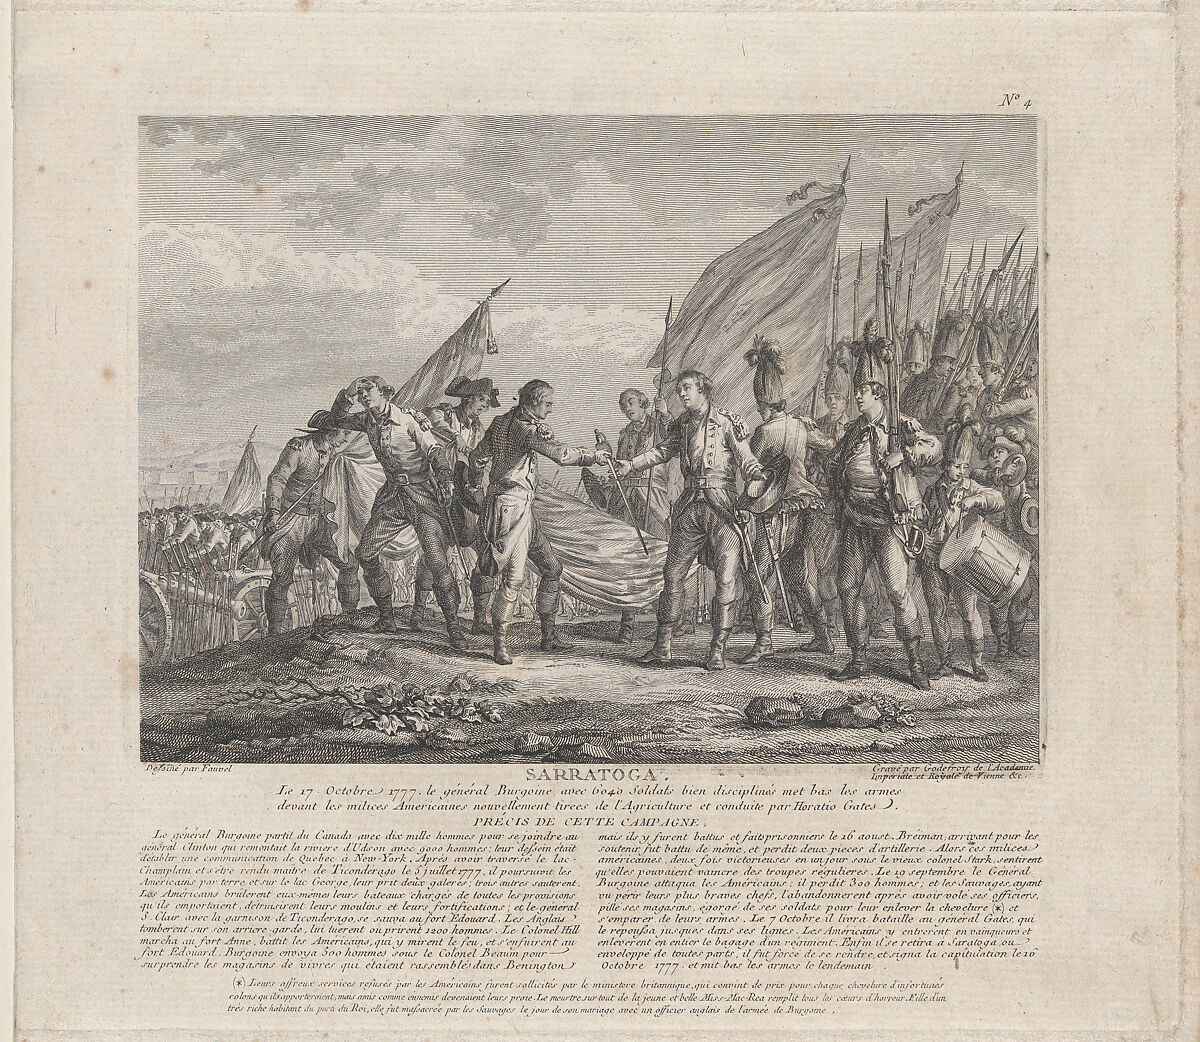 Sarratoga [sic] (The Surrender of General Burgoyne to General Horatio Gates, Battle of Saratoga, October 17, 1777), François Godefroy (French, 1743?–1819), Engraving 